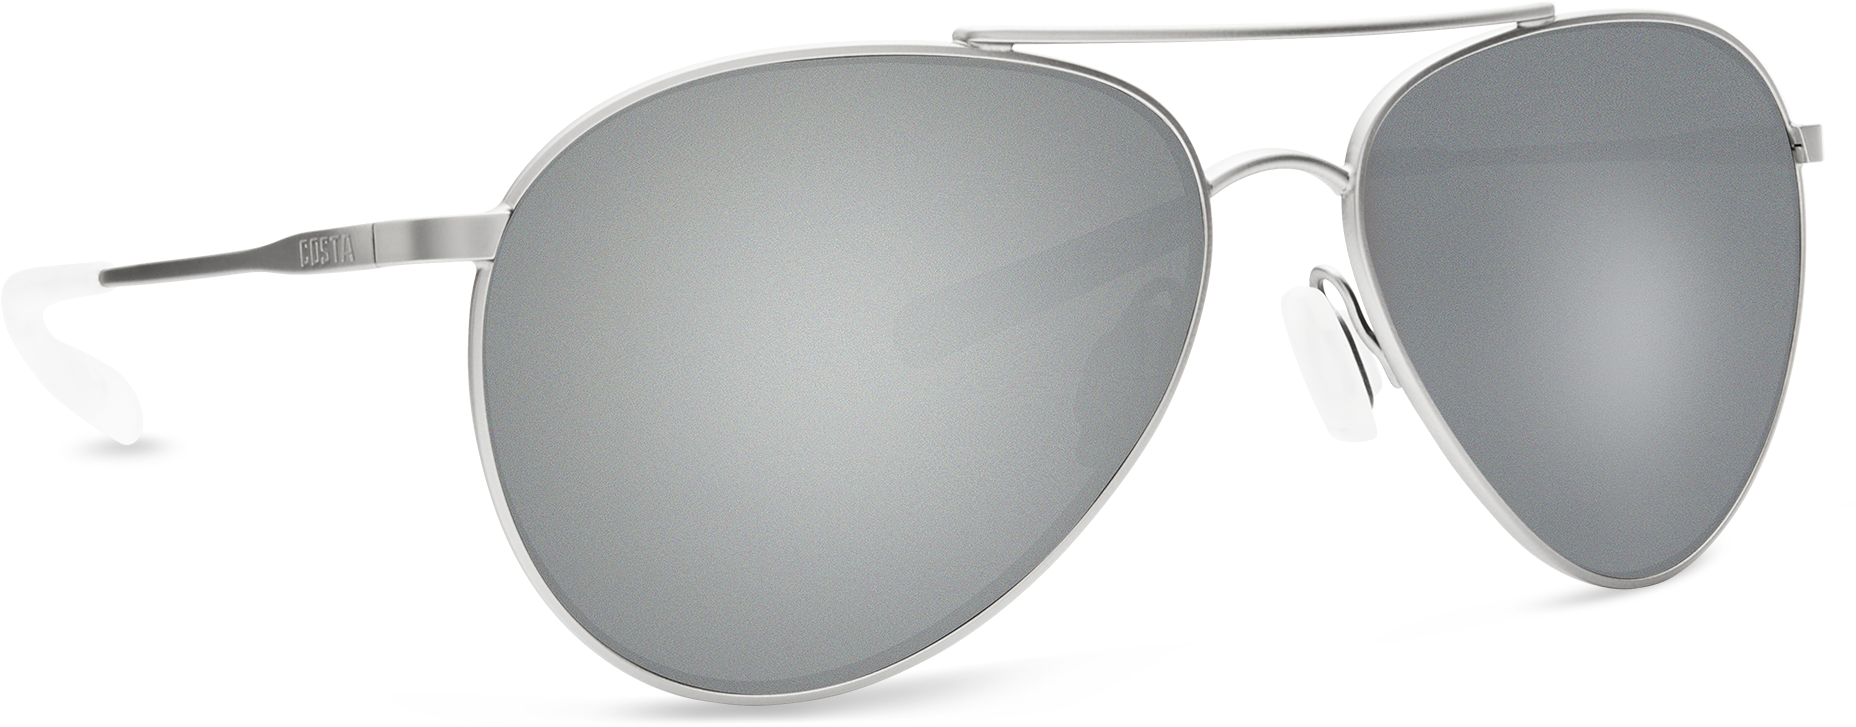 Silver Aviator Sunglasses PNG